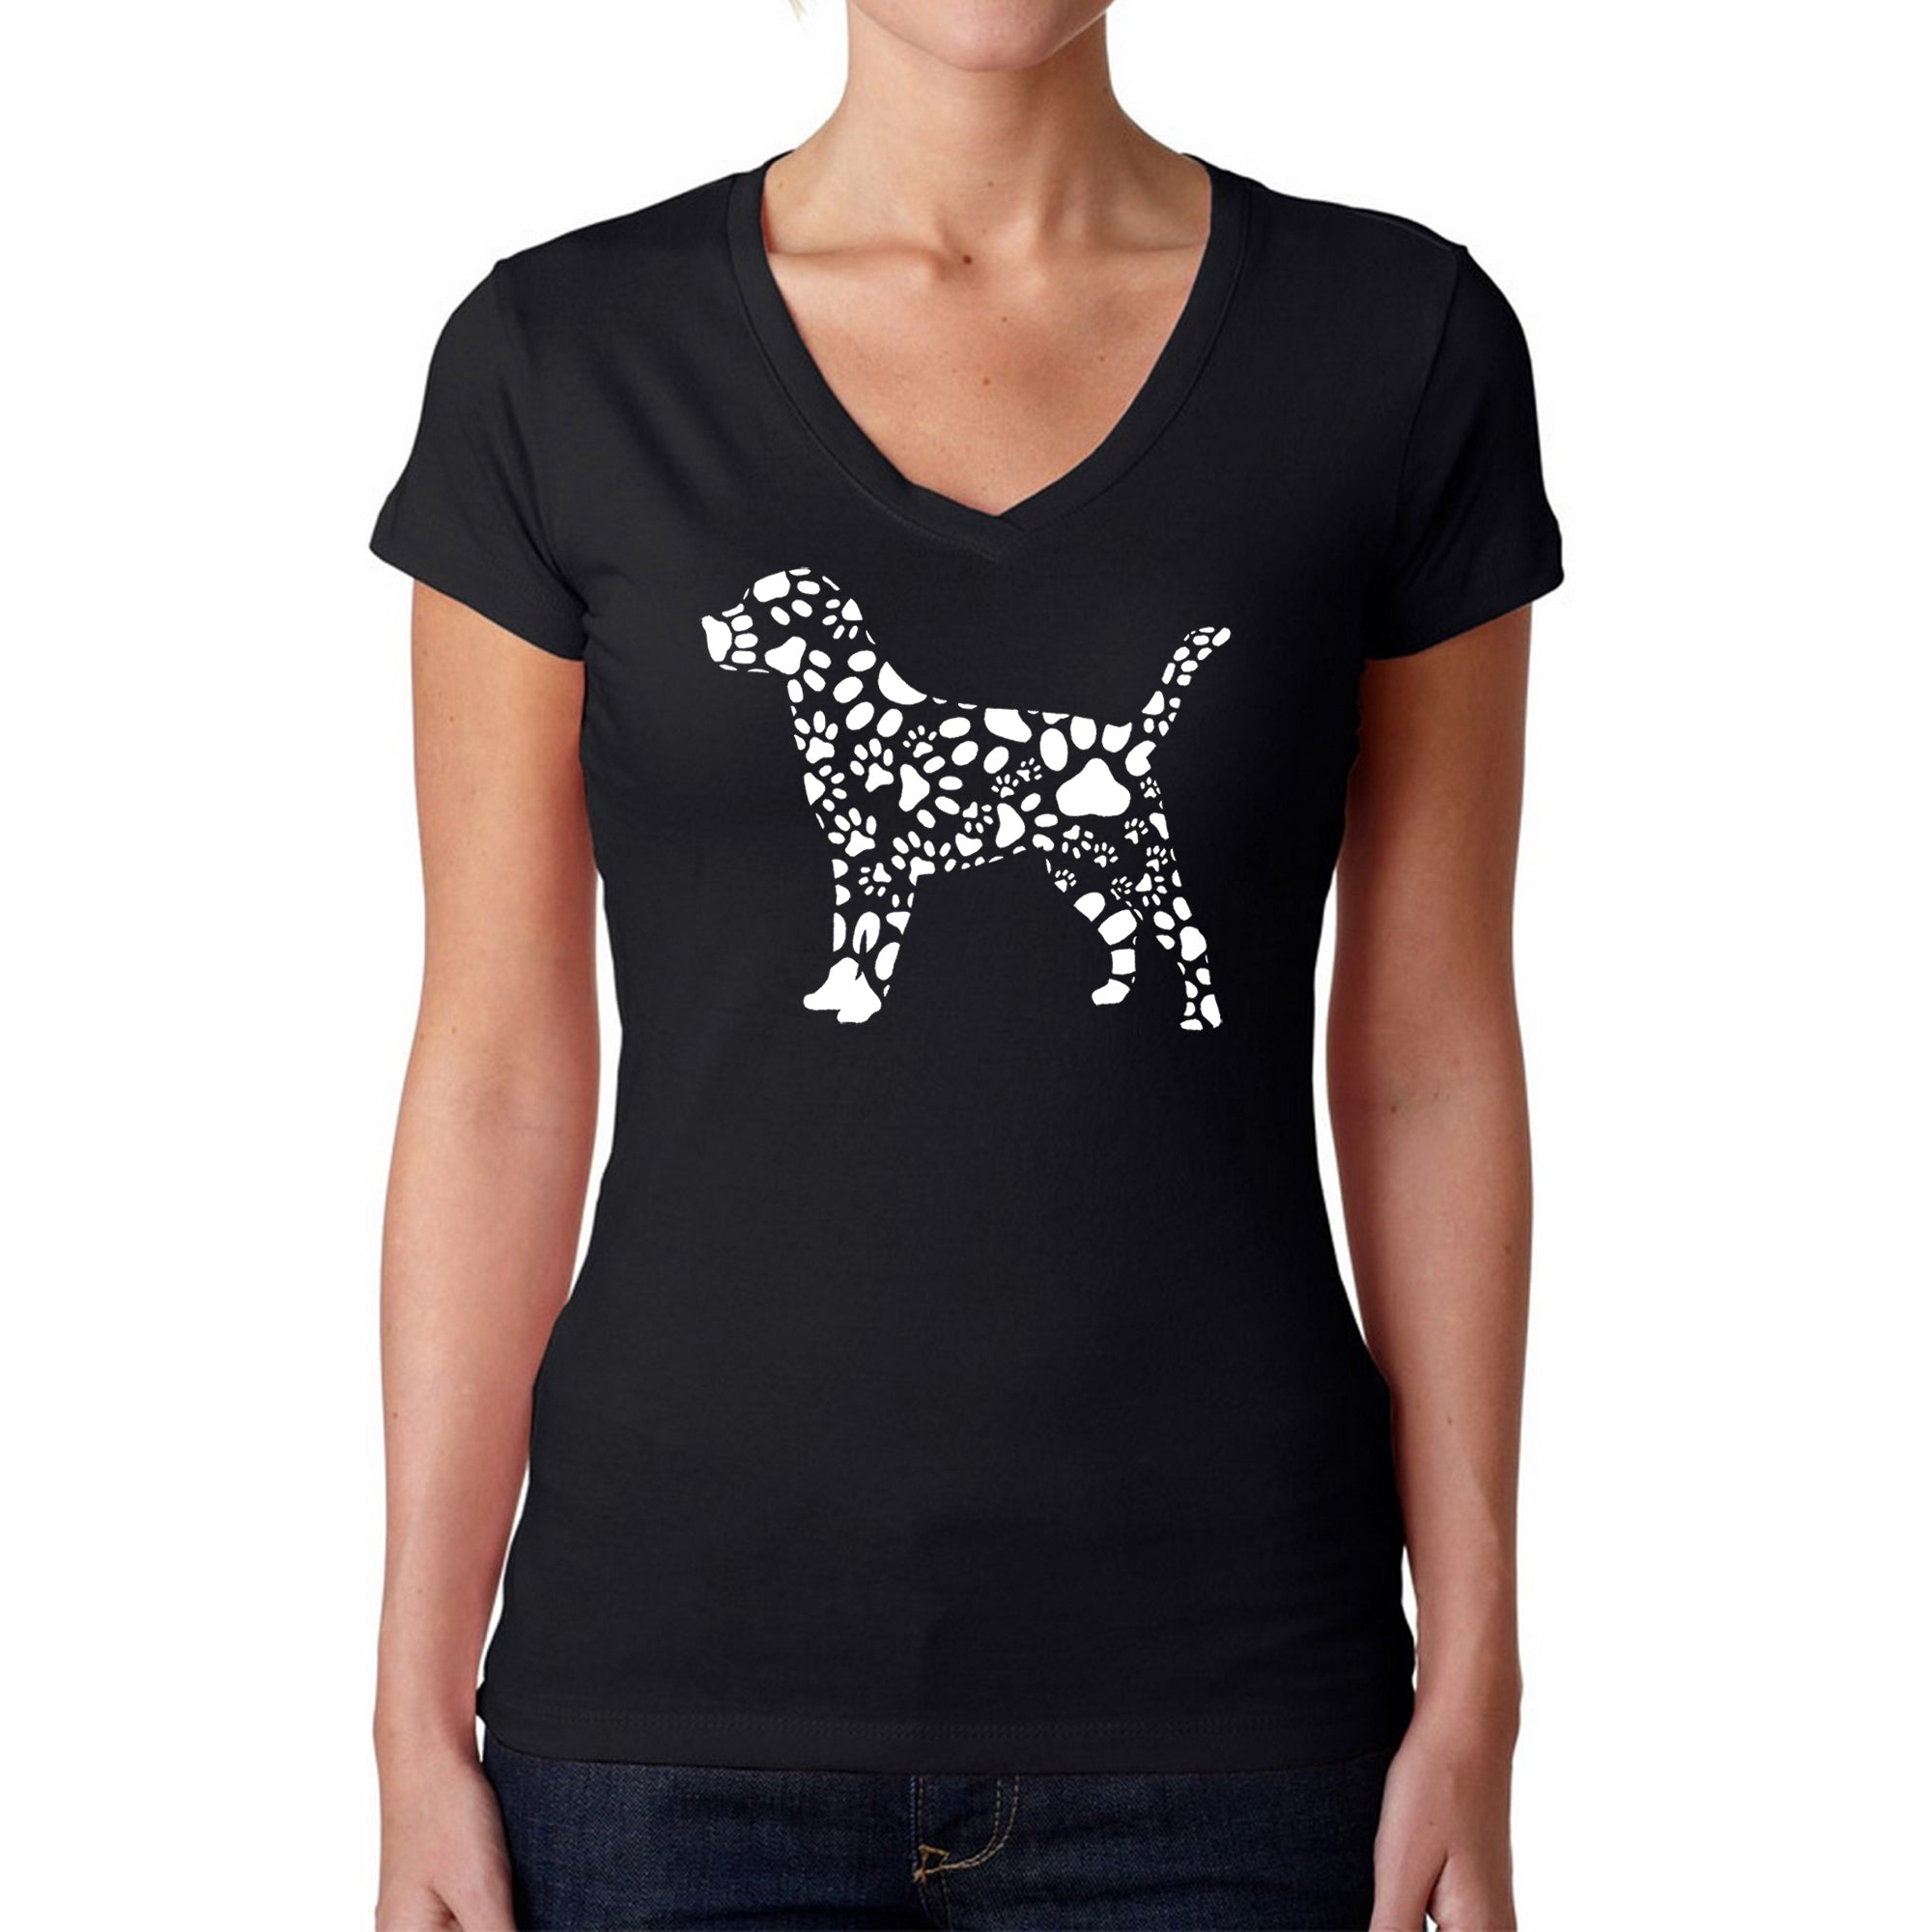 Dog Paw Prints - Women's Word Art V-Neck T-Shirt - Black - XX-Large